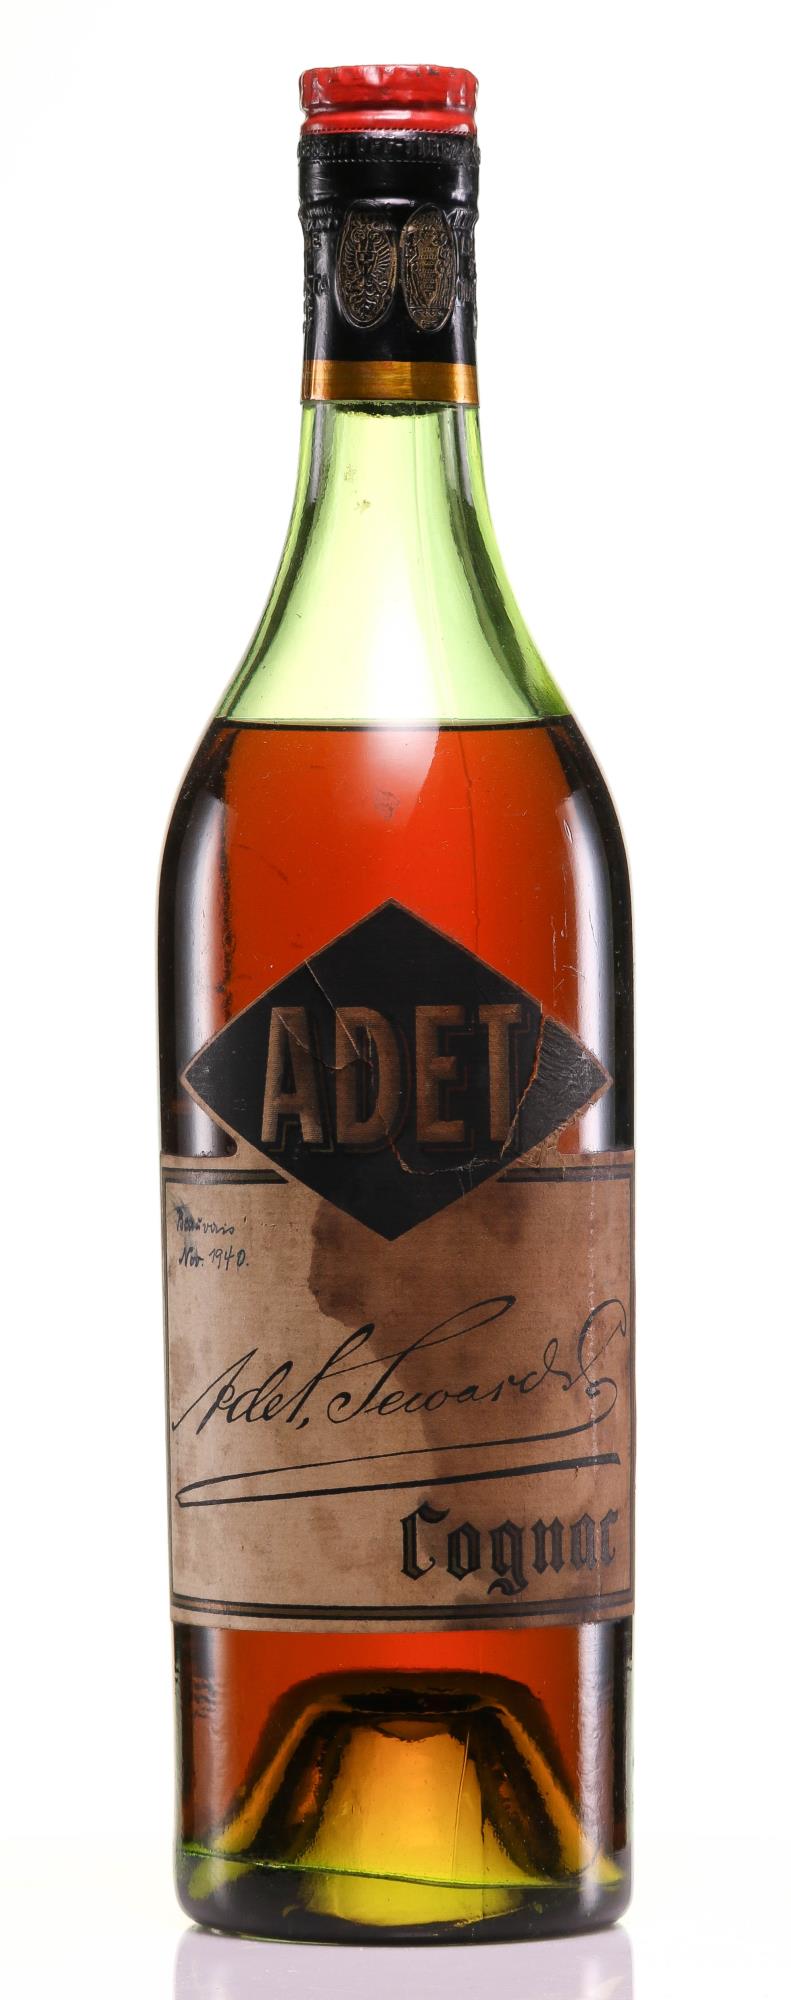 Adet Seward & Co Cognac 1940 (Petite Champagne) - Rue Pinard